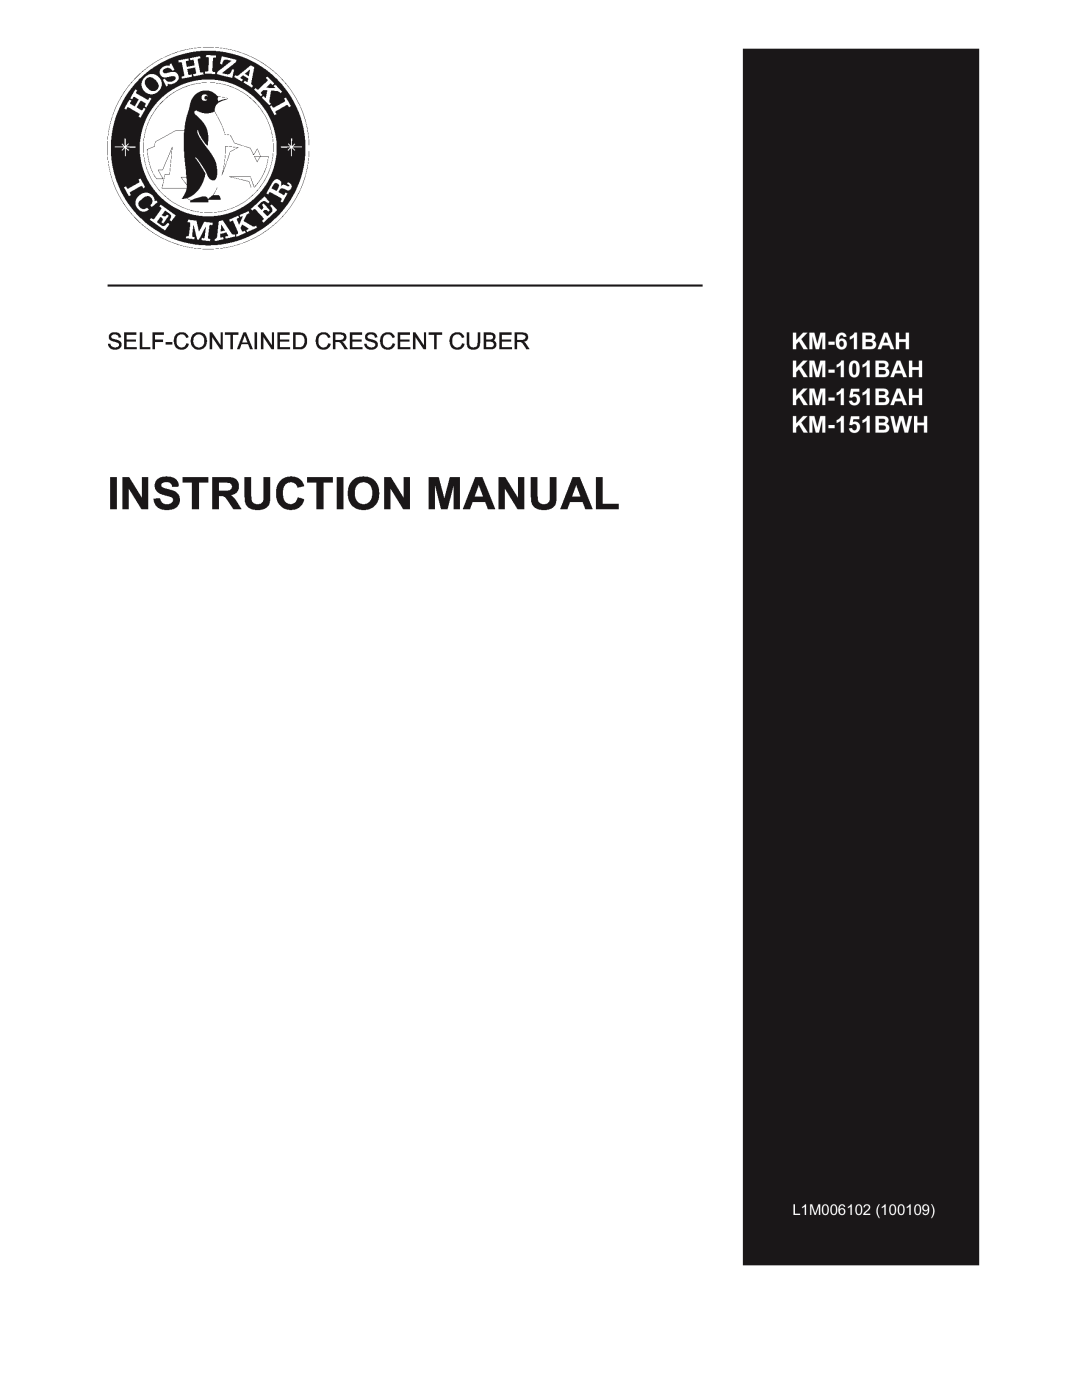 Hoshizaki KM-61BAH, KM-101BAH, KM-151BWH instruction manual Instruction Manual, Self-Containedcrescent Cuber, L1M006102 